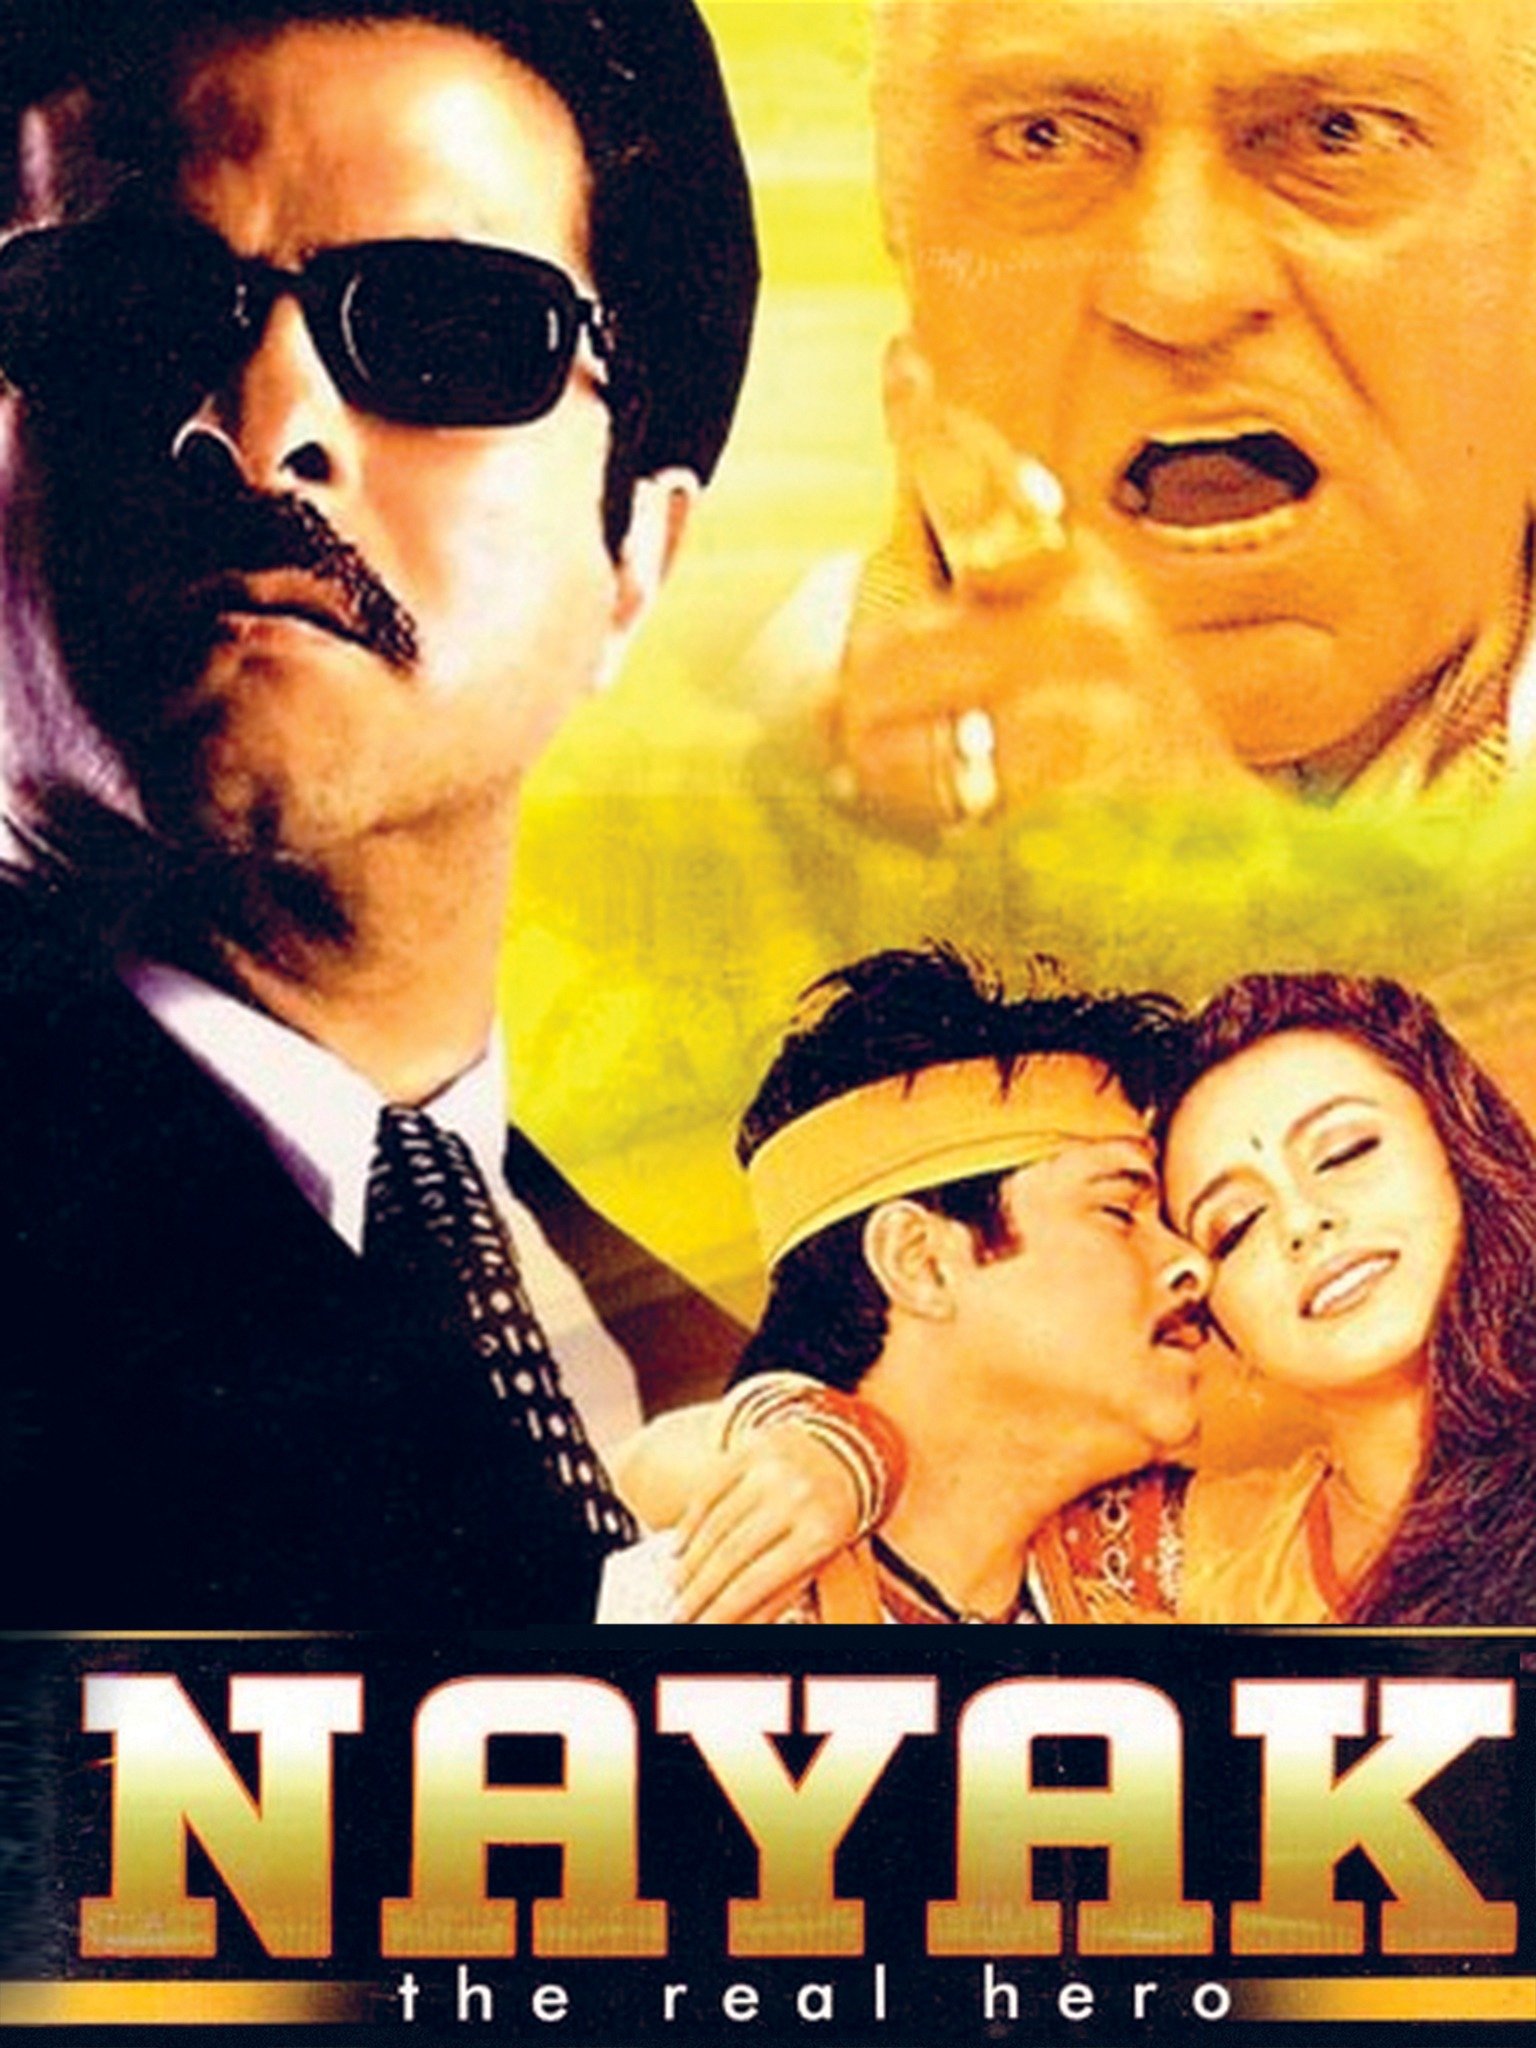 nayak-the-real-hero-2001-3990-poster.jpg